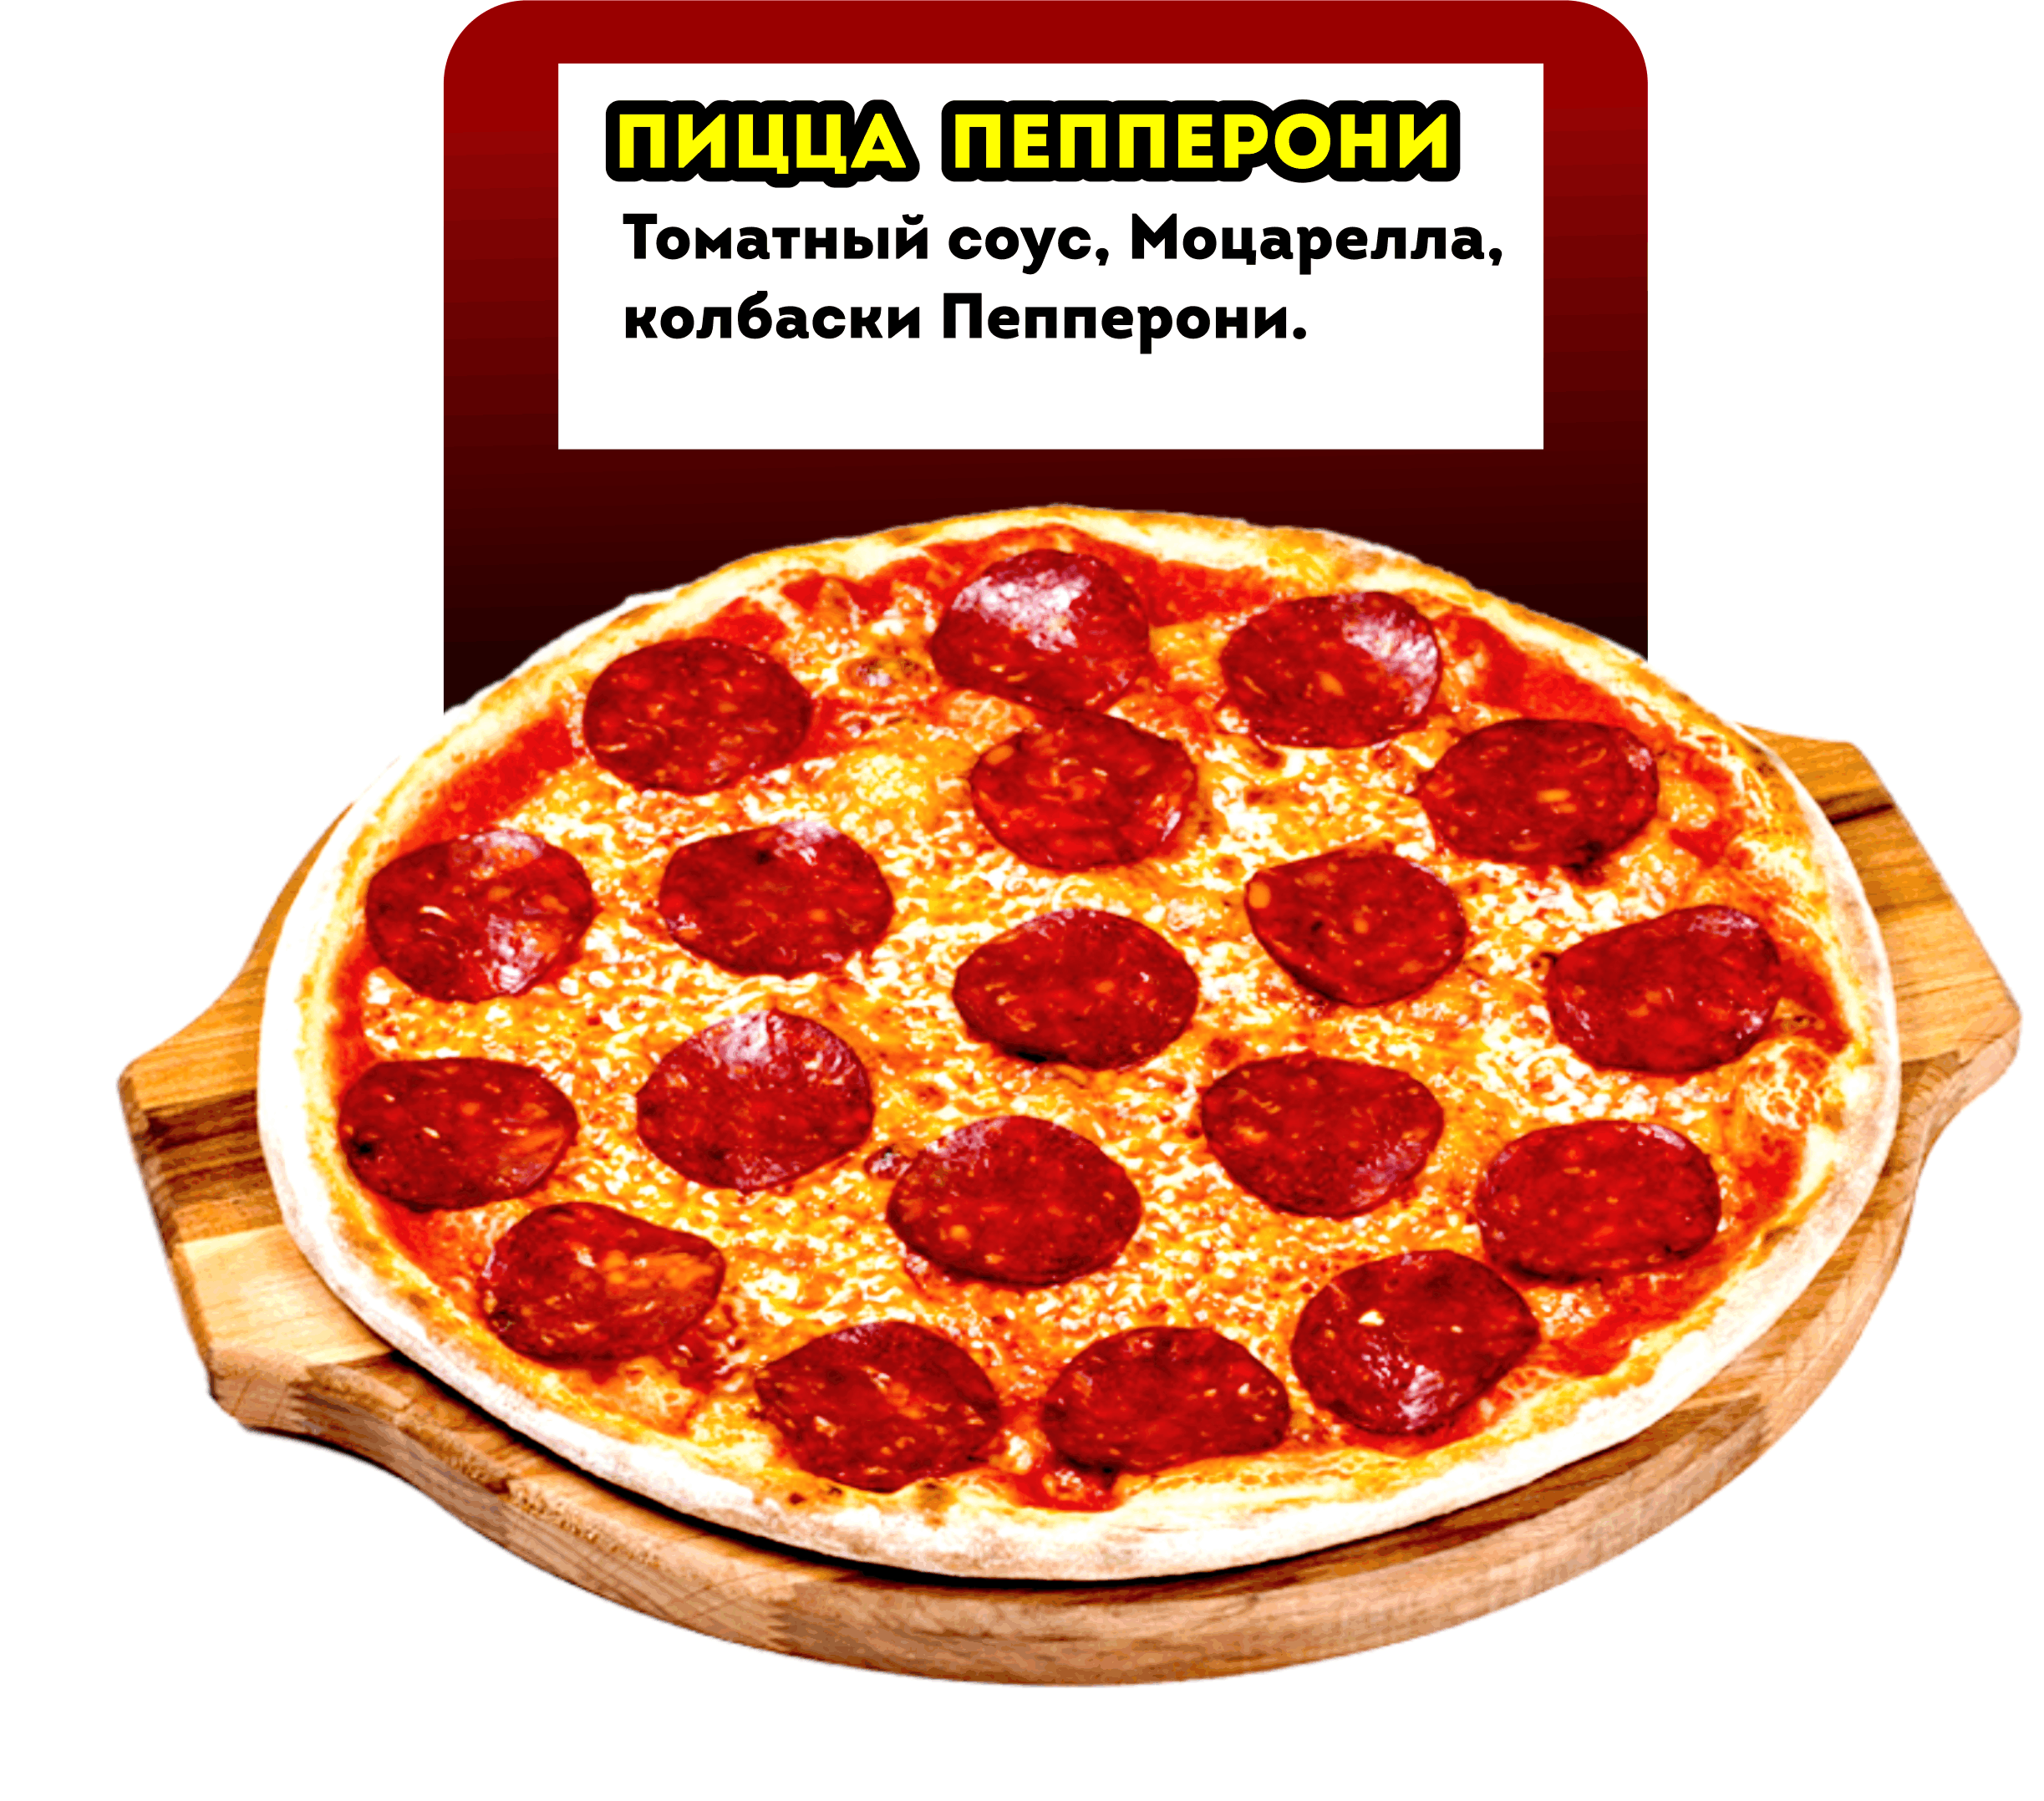 сколько кк в пицце пепперони (120) фото